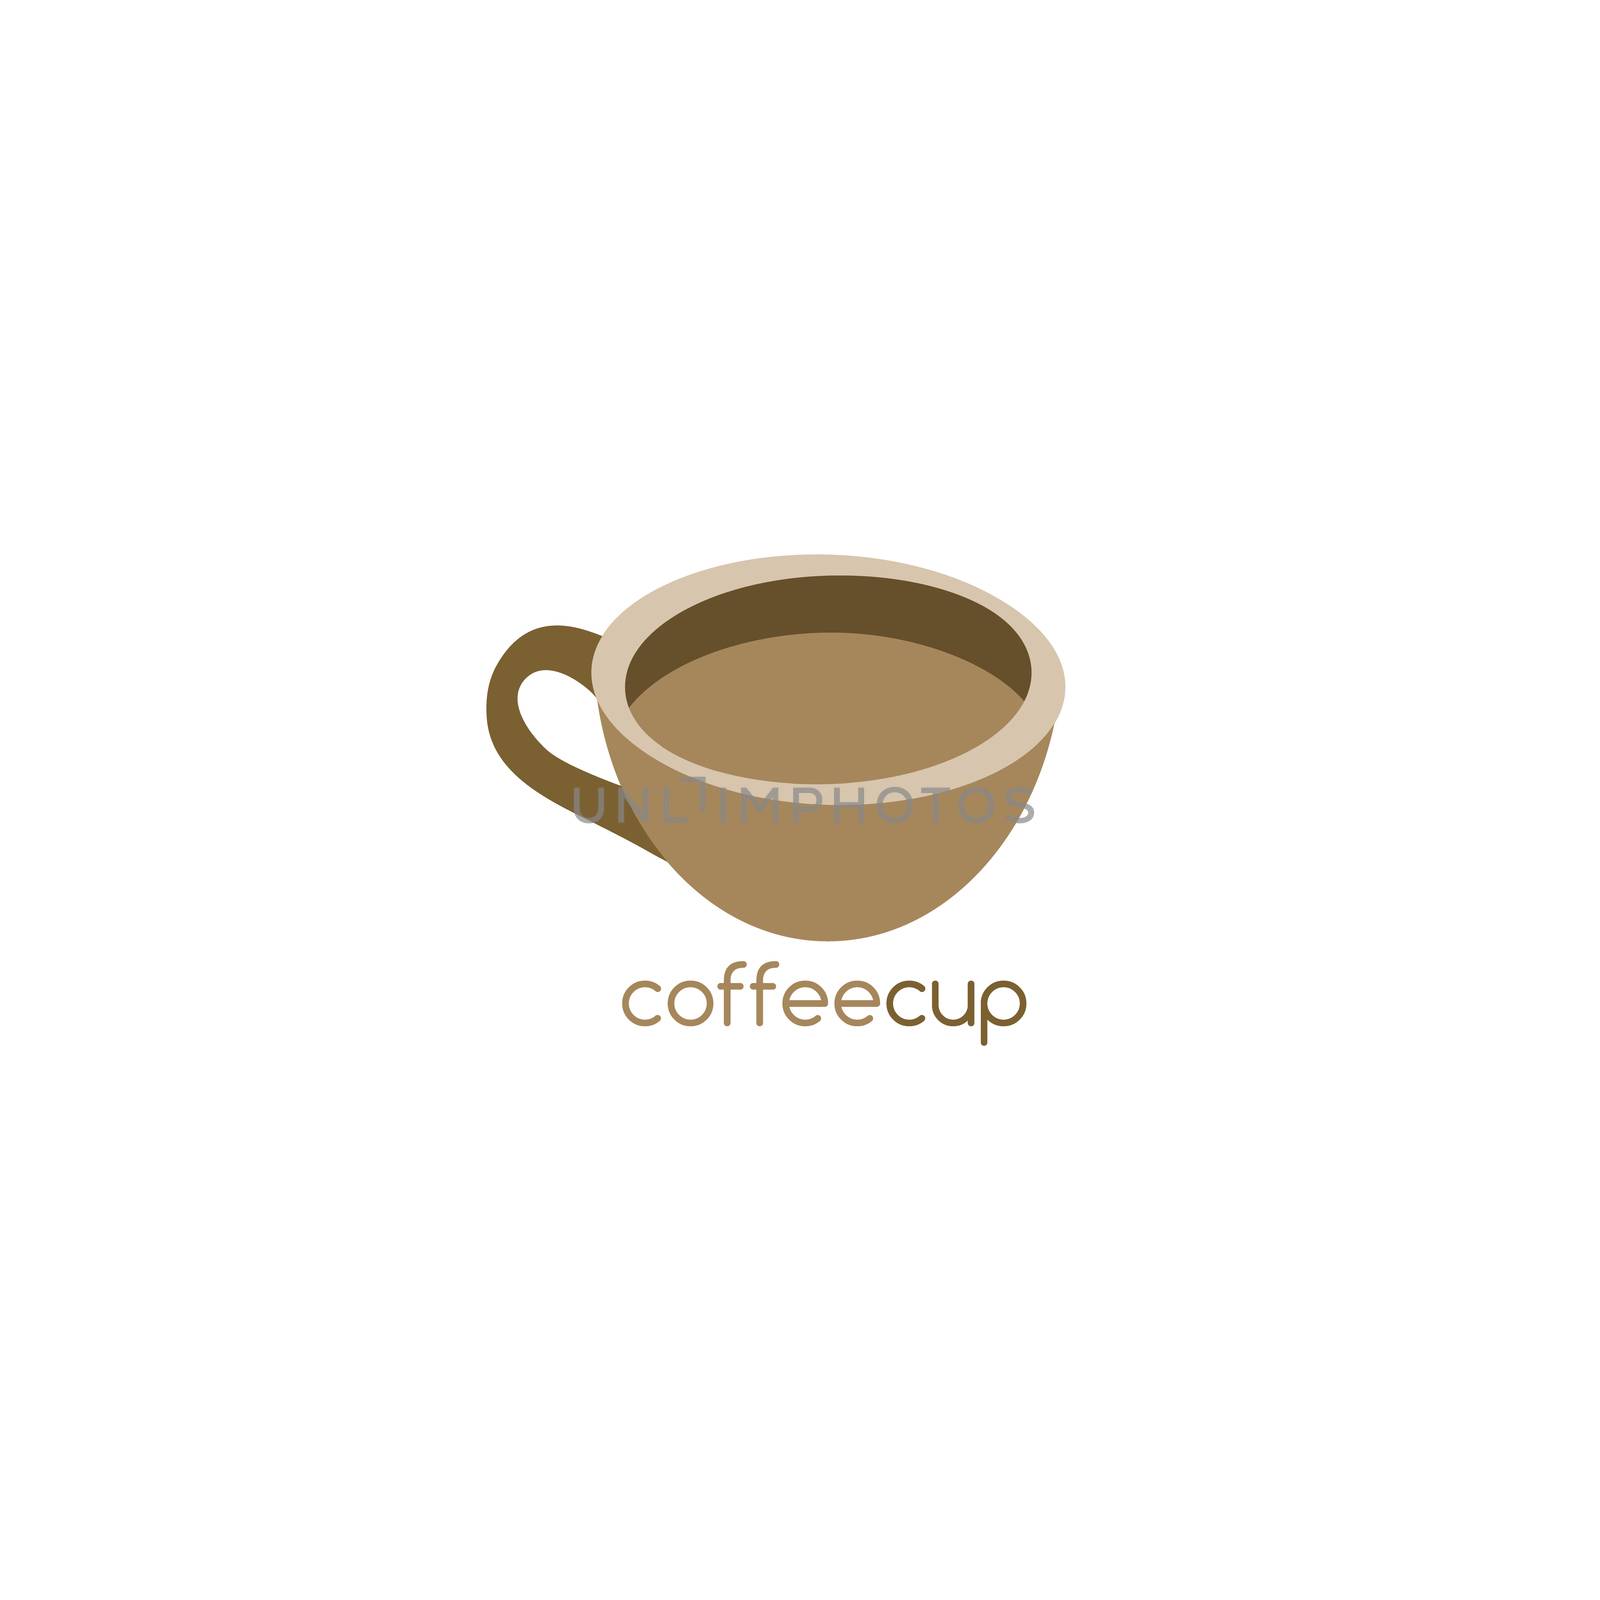 coffee cup logo template vector art illustration